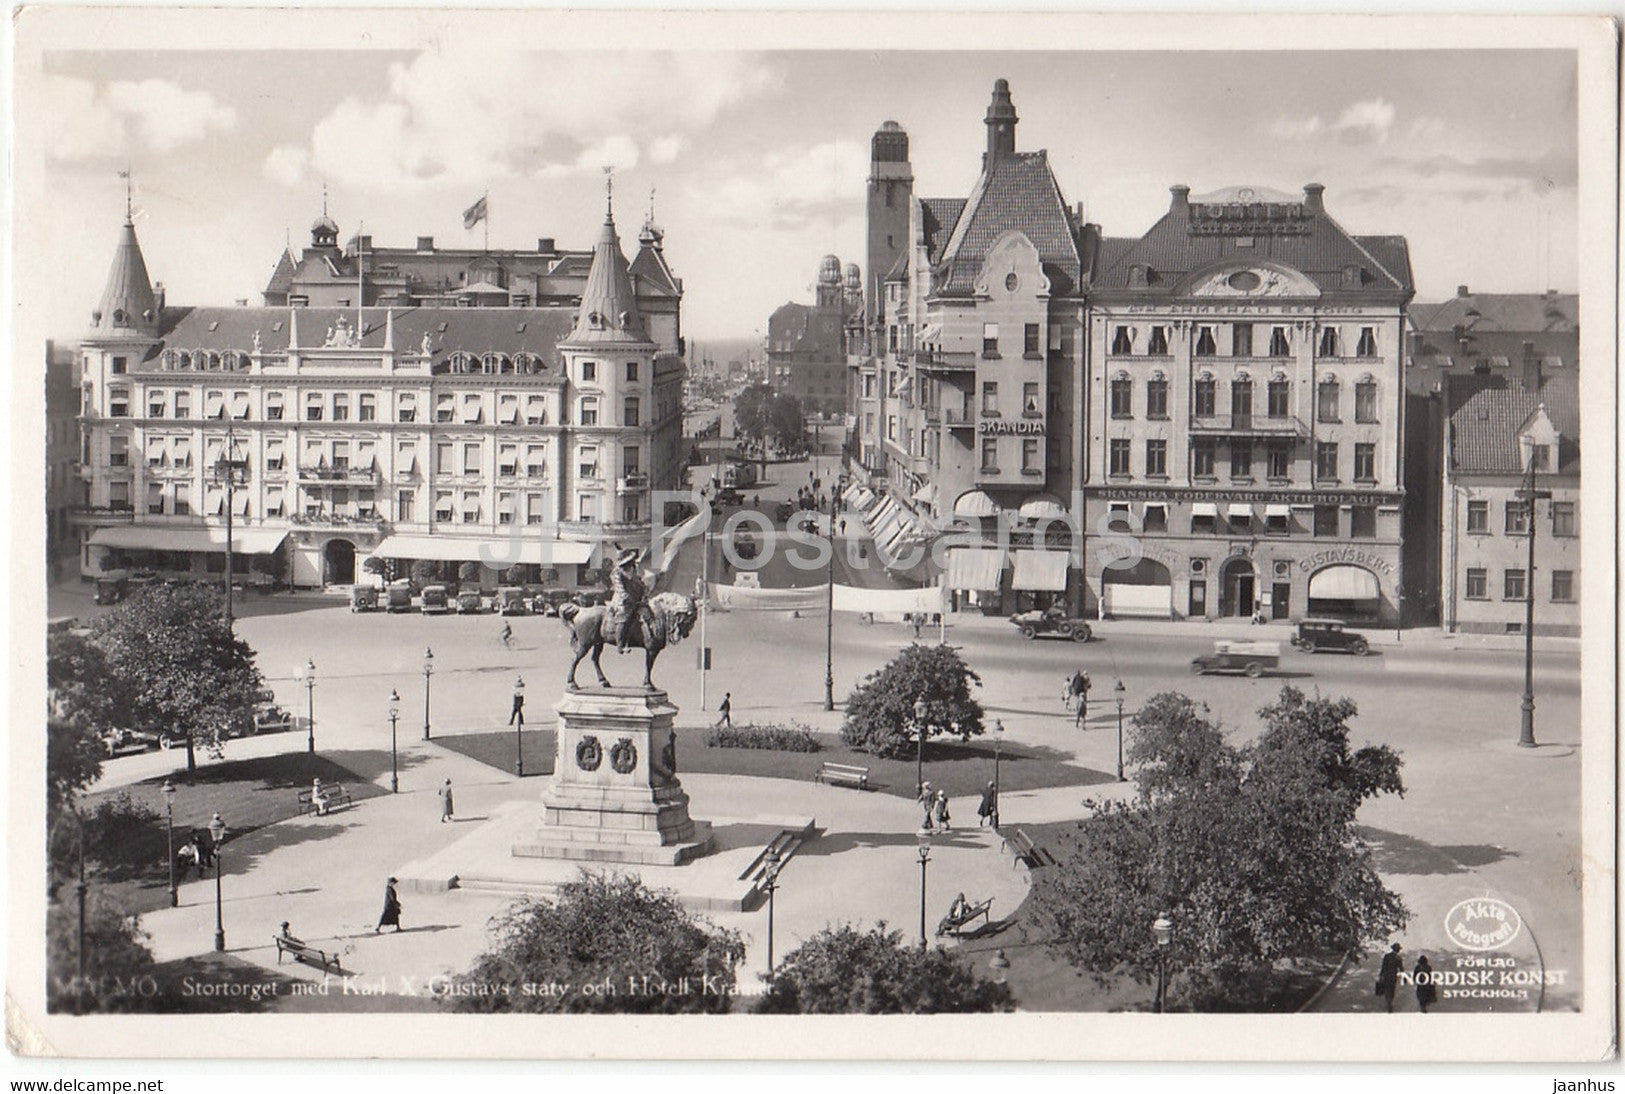 Malmo - Stortorget med Karl X Gustavs staty och hotell - hotel - old postcard - 1939 - Sweden - used - JH Postcards